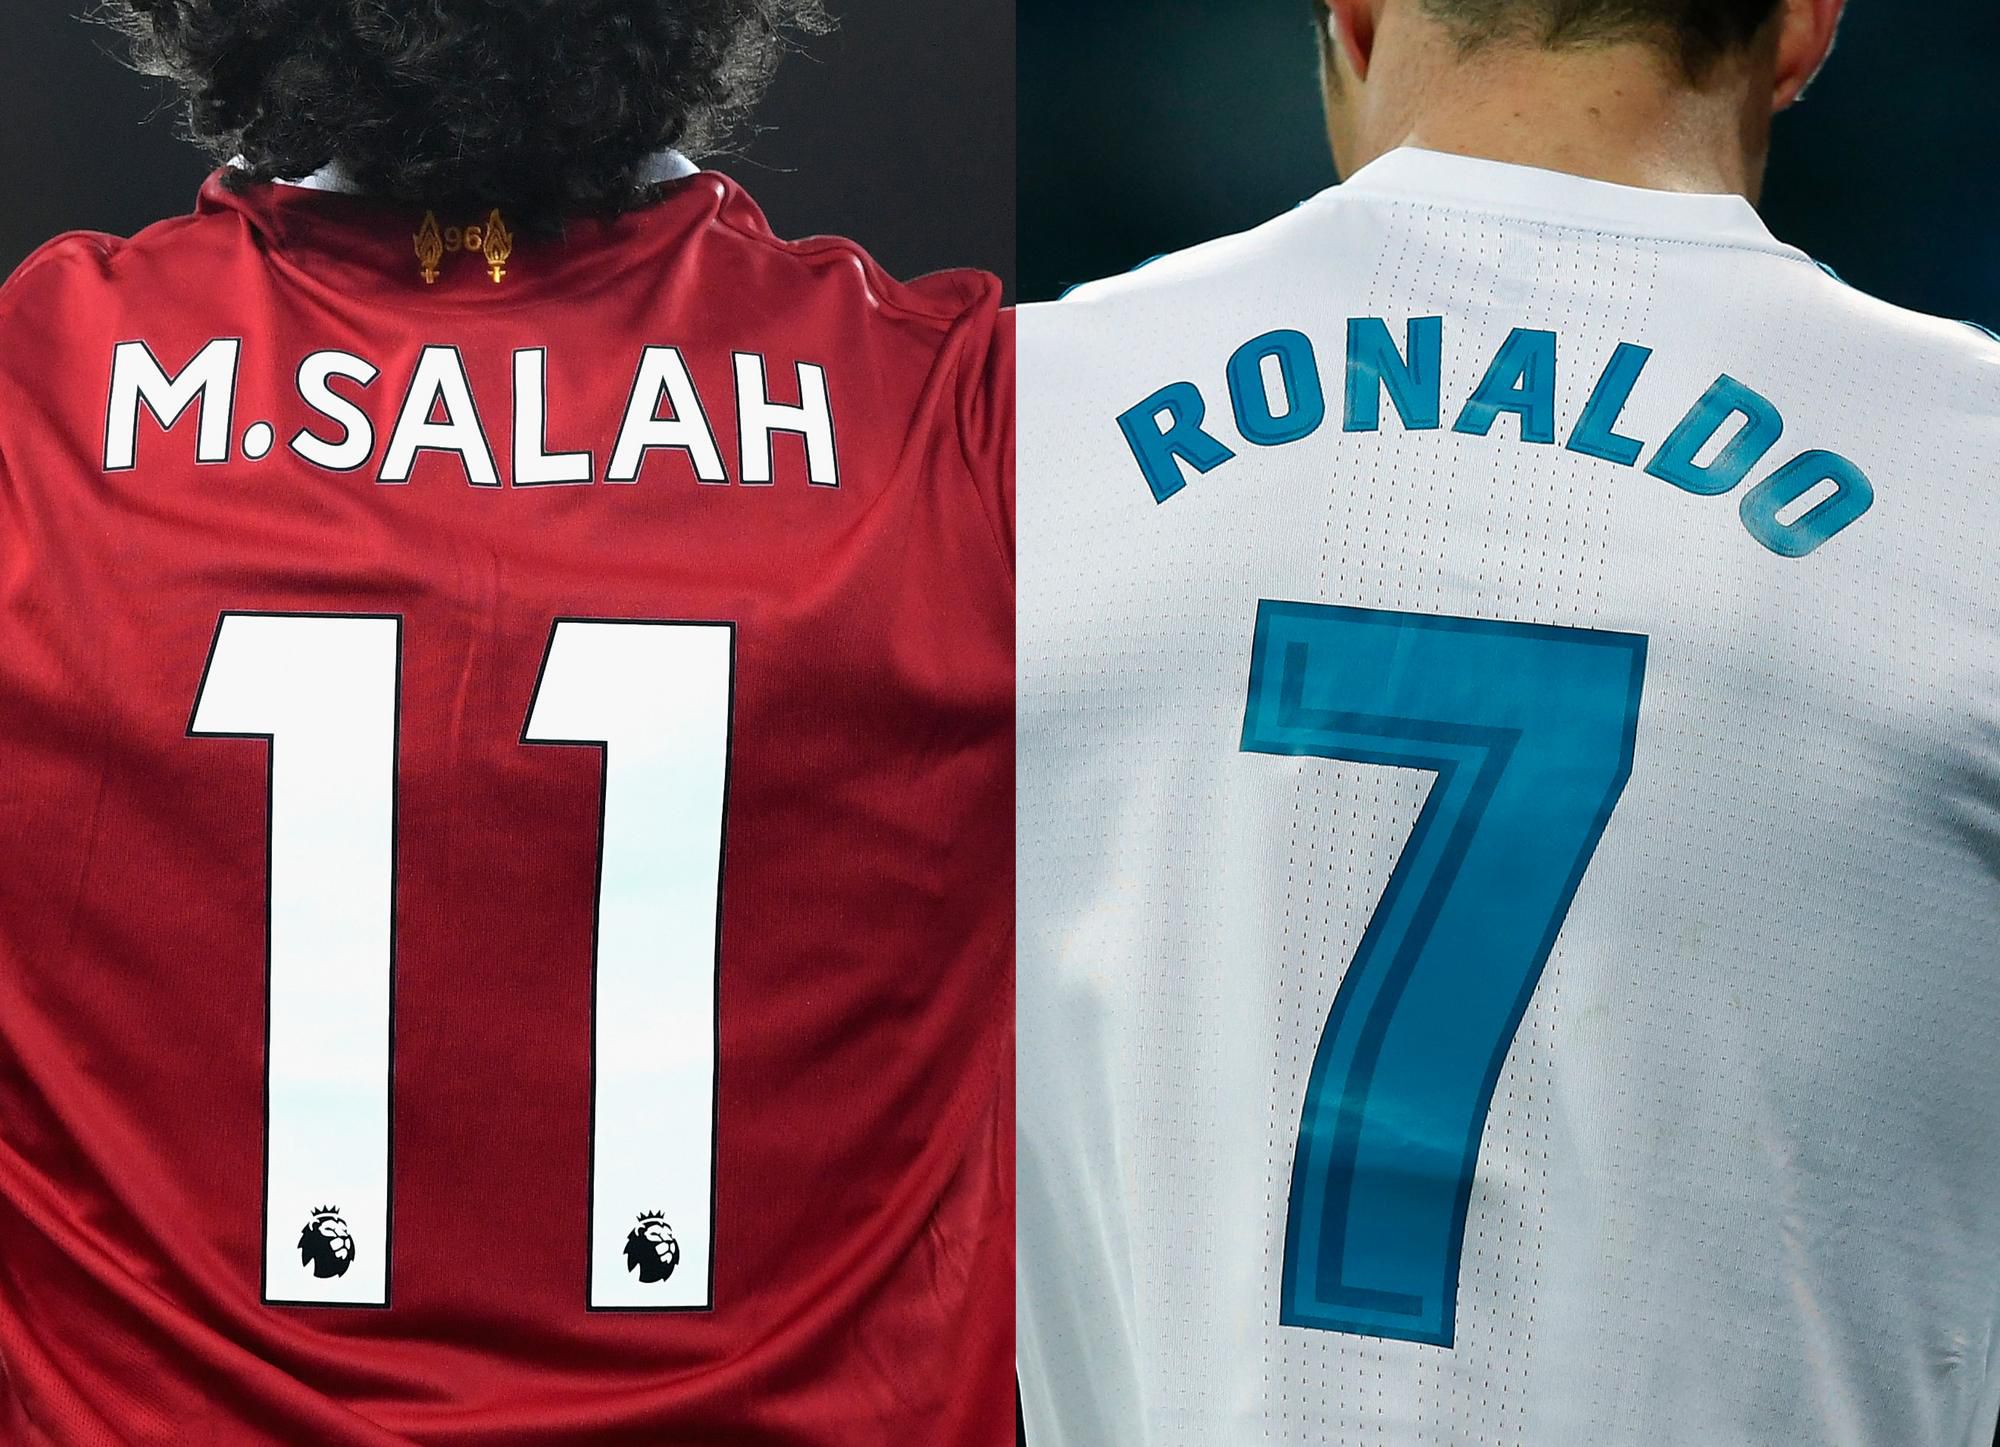 Mohamed Salah a Cristiano Ronaldo.